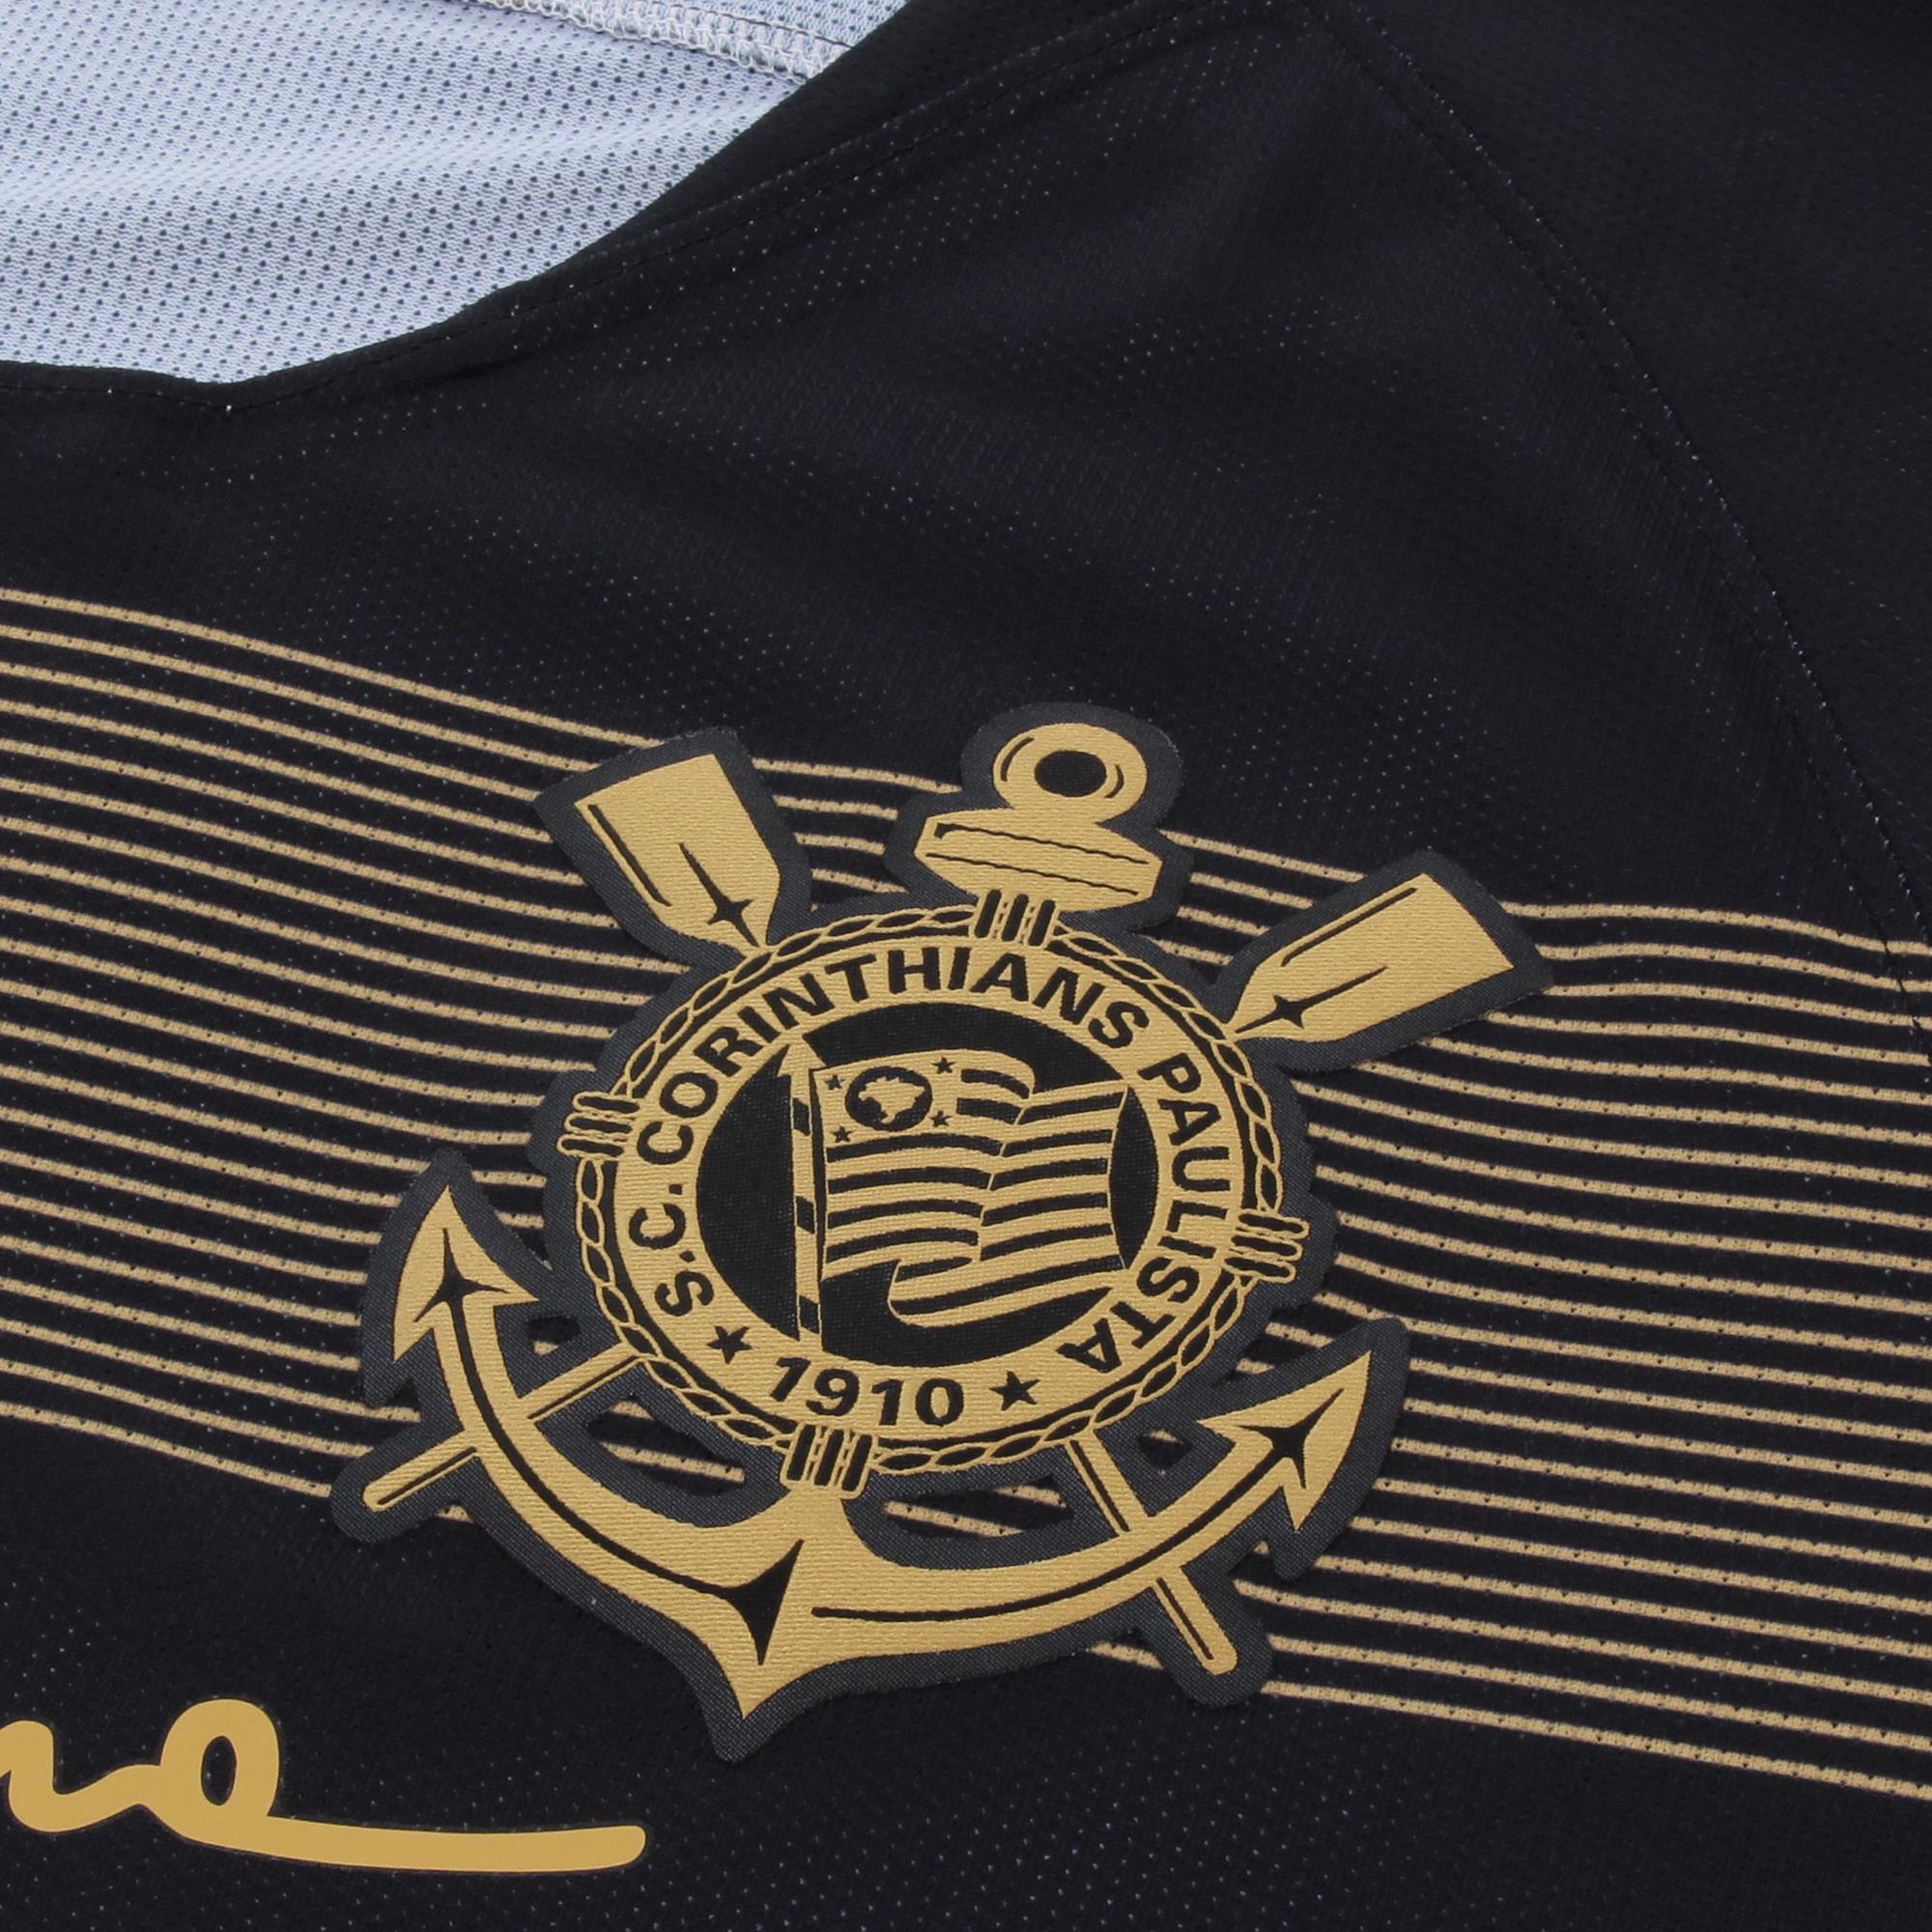 Encadenar Antibióticos margen Todo Sobre Camisetas on Twitter: "🇧🇷🏎️ @Corinthians presenta su tercera  camiseta @nikefootball en honor al legendario Ayrton Senna:  https://t.co/3WrRj3MWbj https://t.co/jQEfTQ8P1B" / Twitter